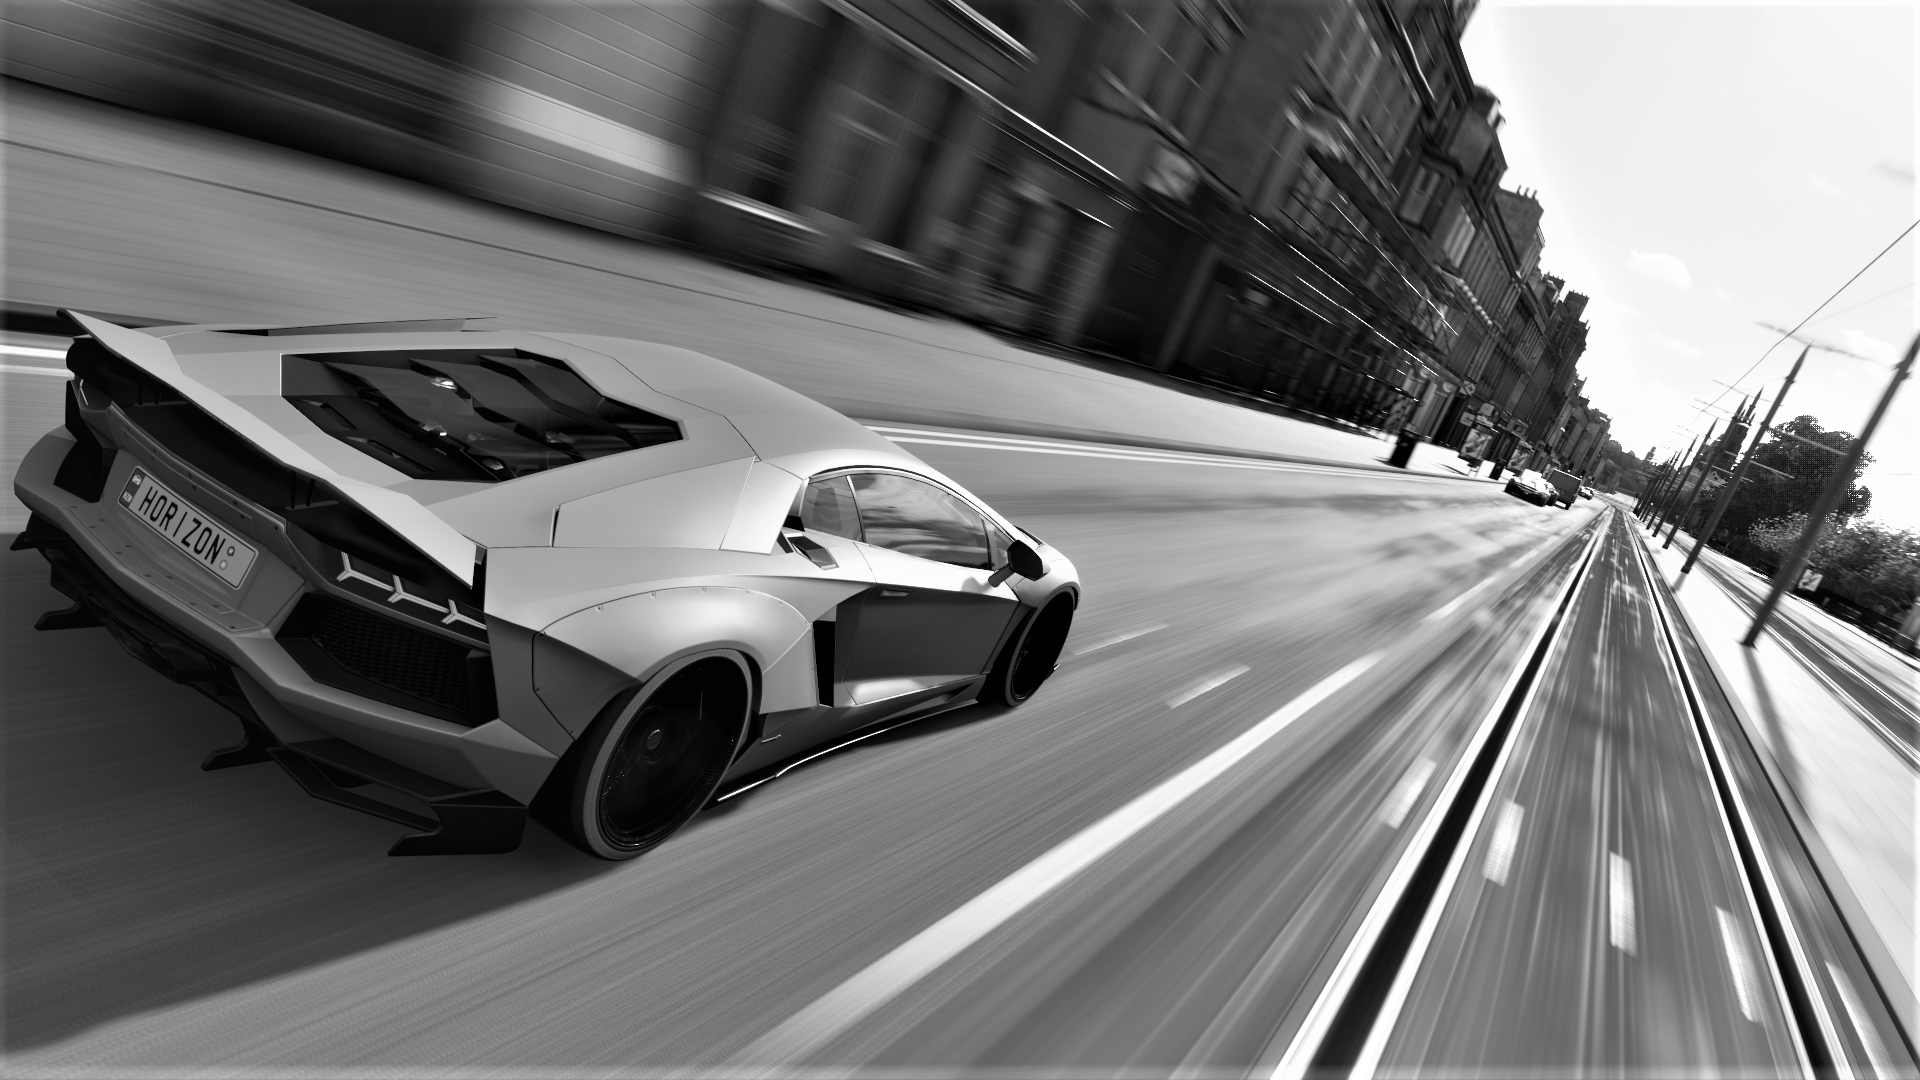 General 1920x1080 Lamborghini Aventador Forza Forza Horizon 4 Lamborghini car video games PlaygroundGames monochrome italian cars Volkswagen Group